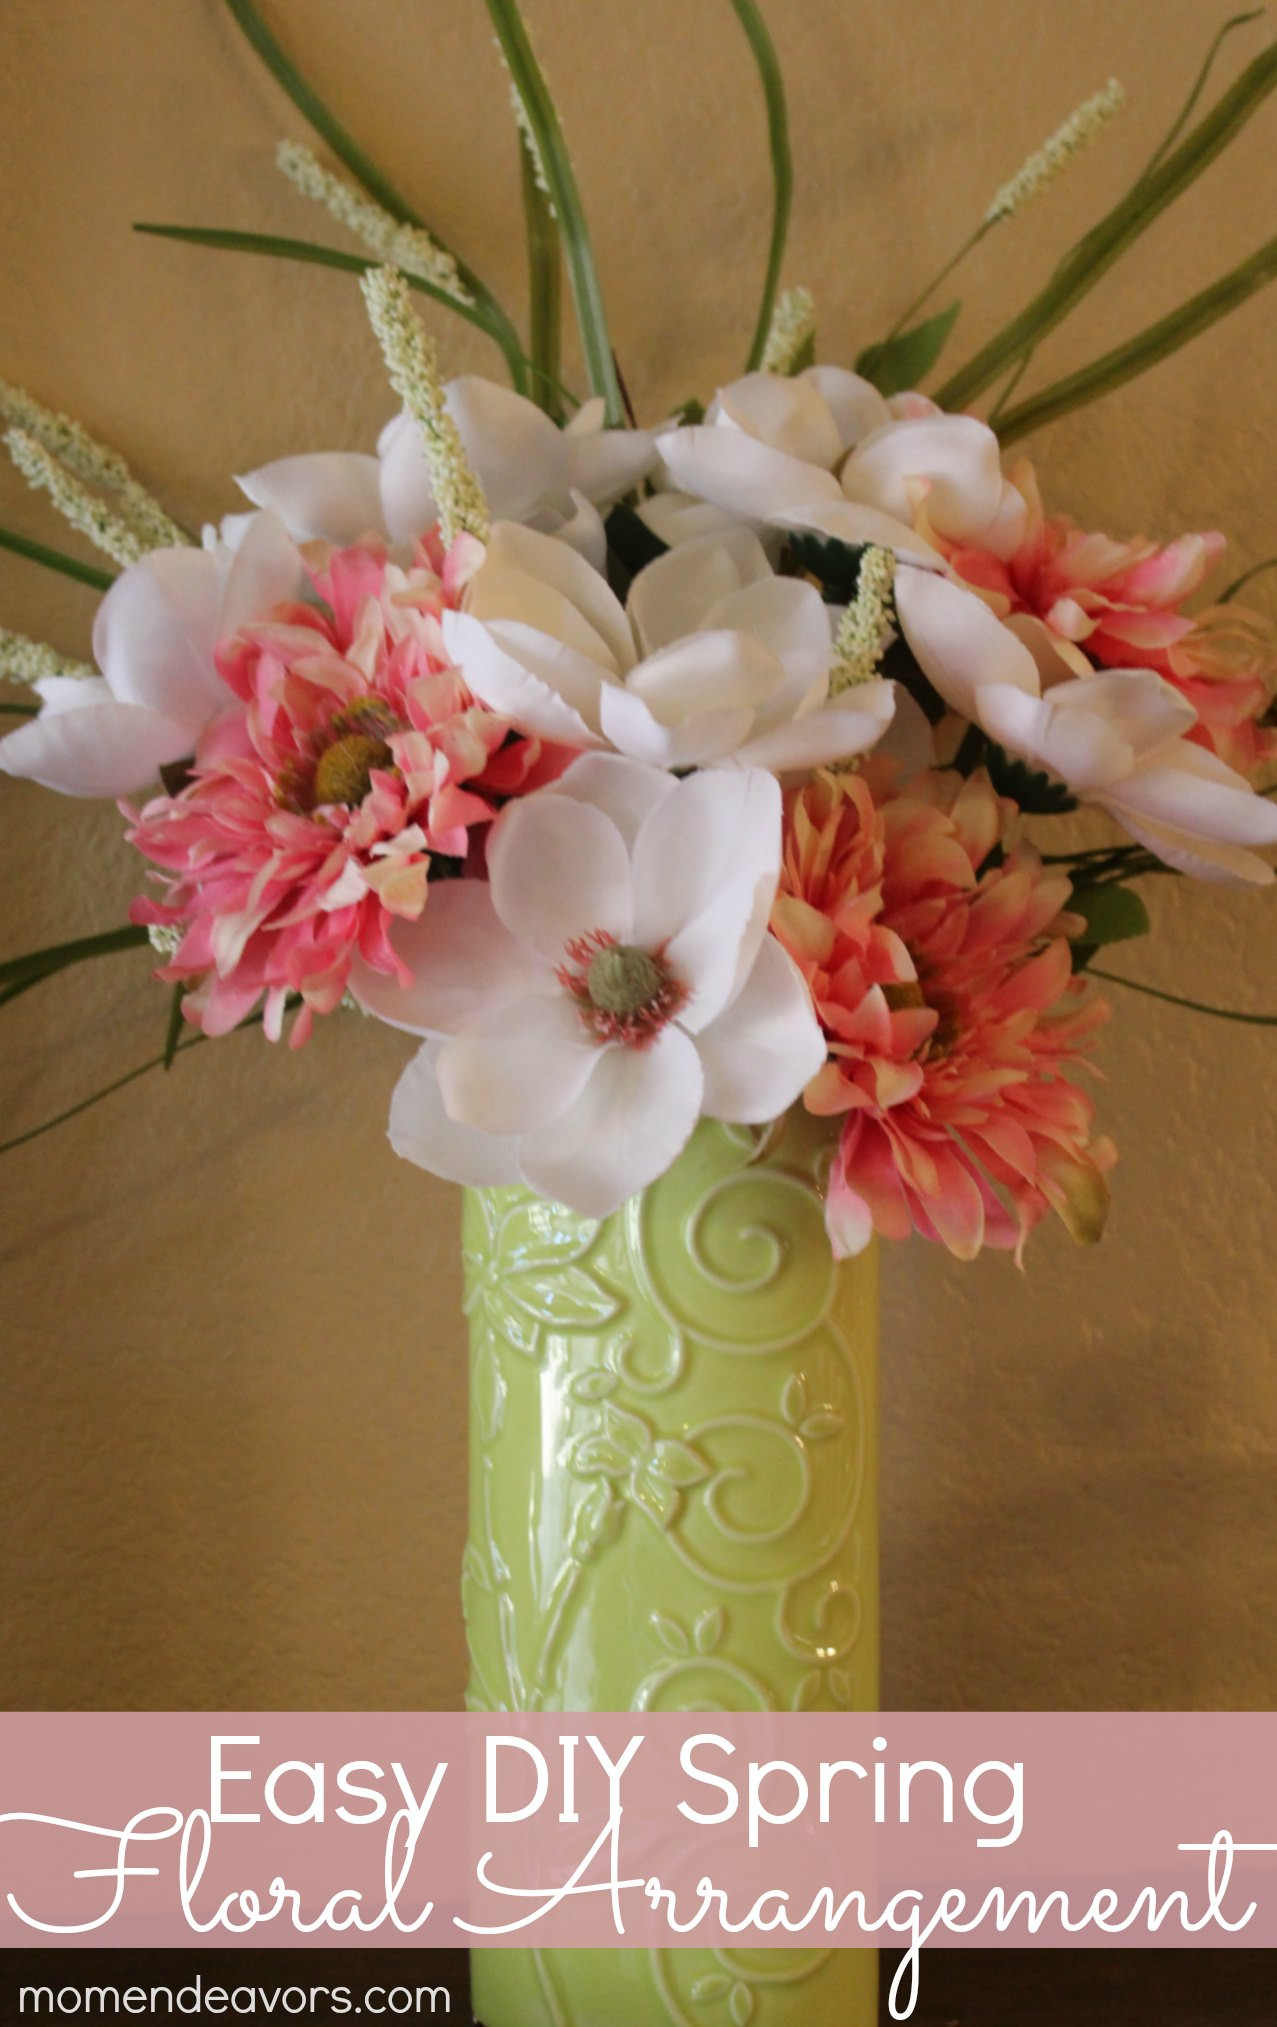 Best ideas about DIY Floral Arrangements
. Save or Pin Easy DIY Spring Flower Arrangement Now.